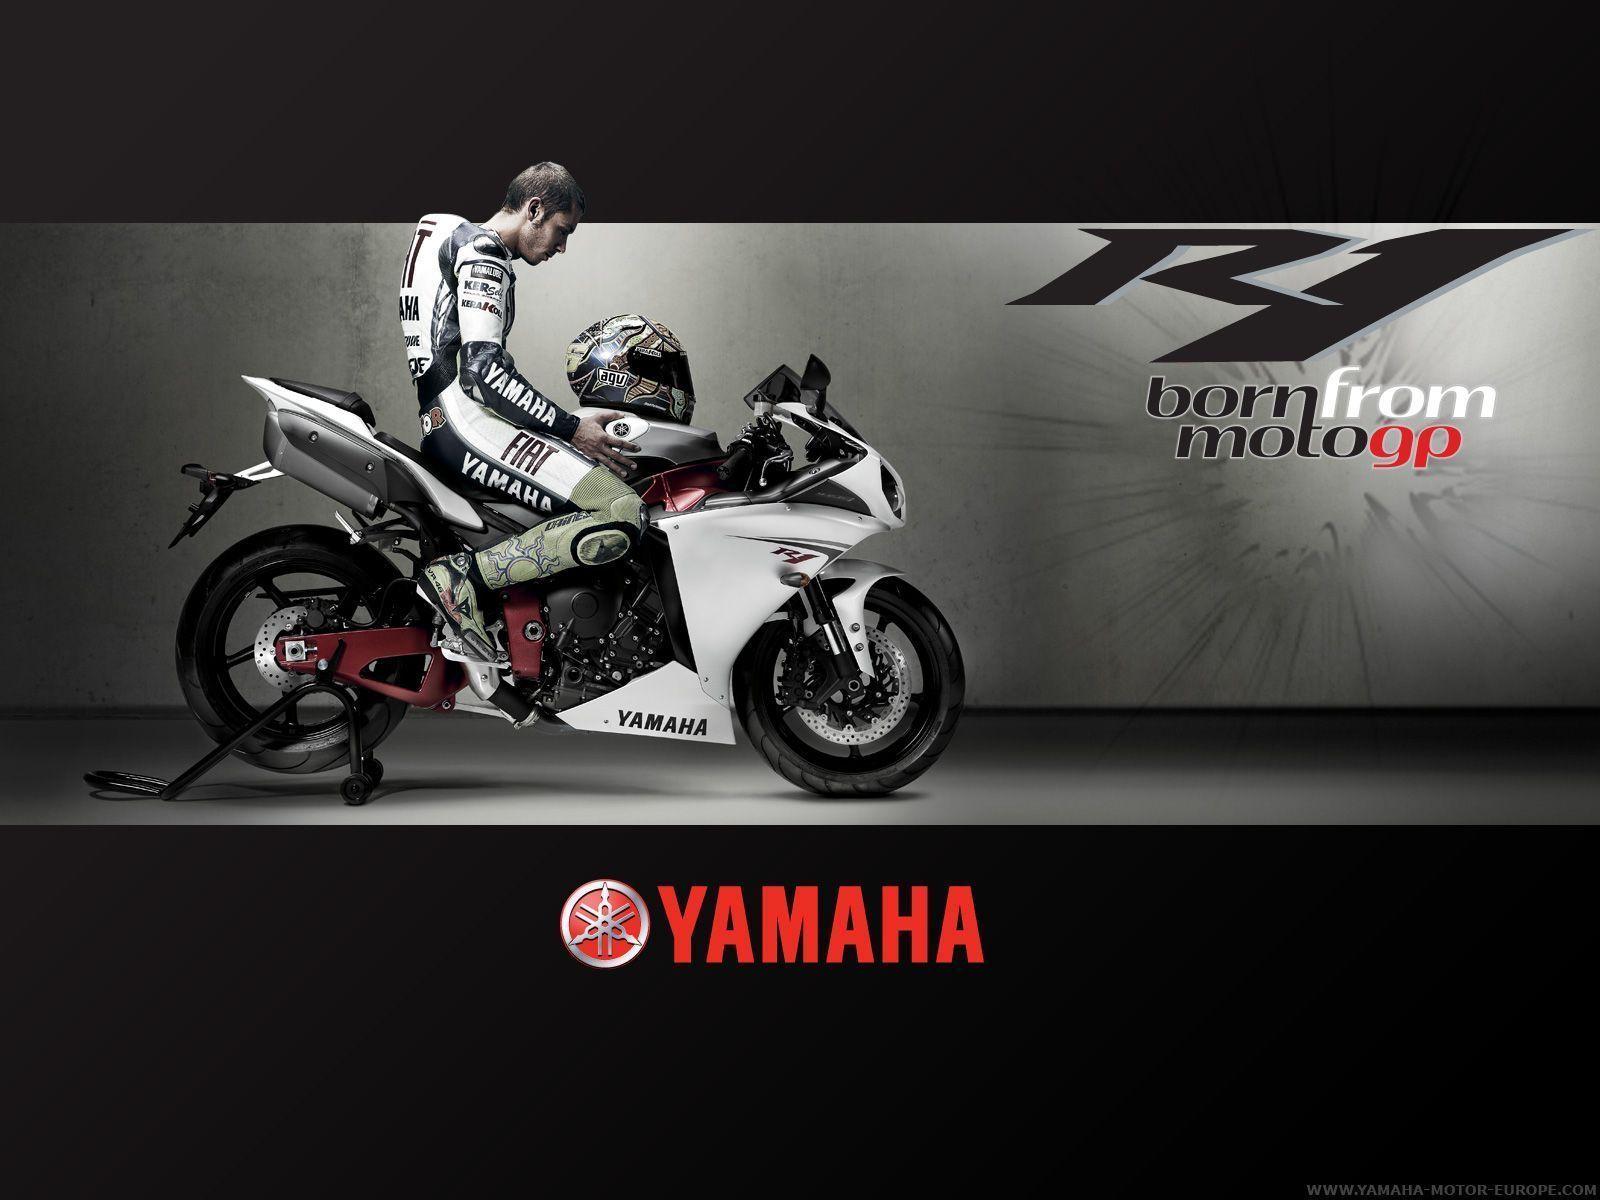 Yamaha Wallpaper